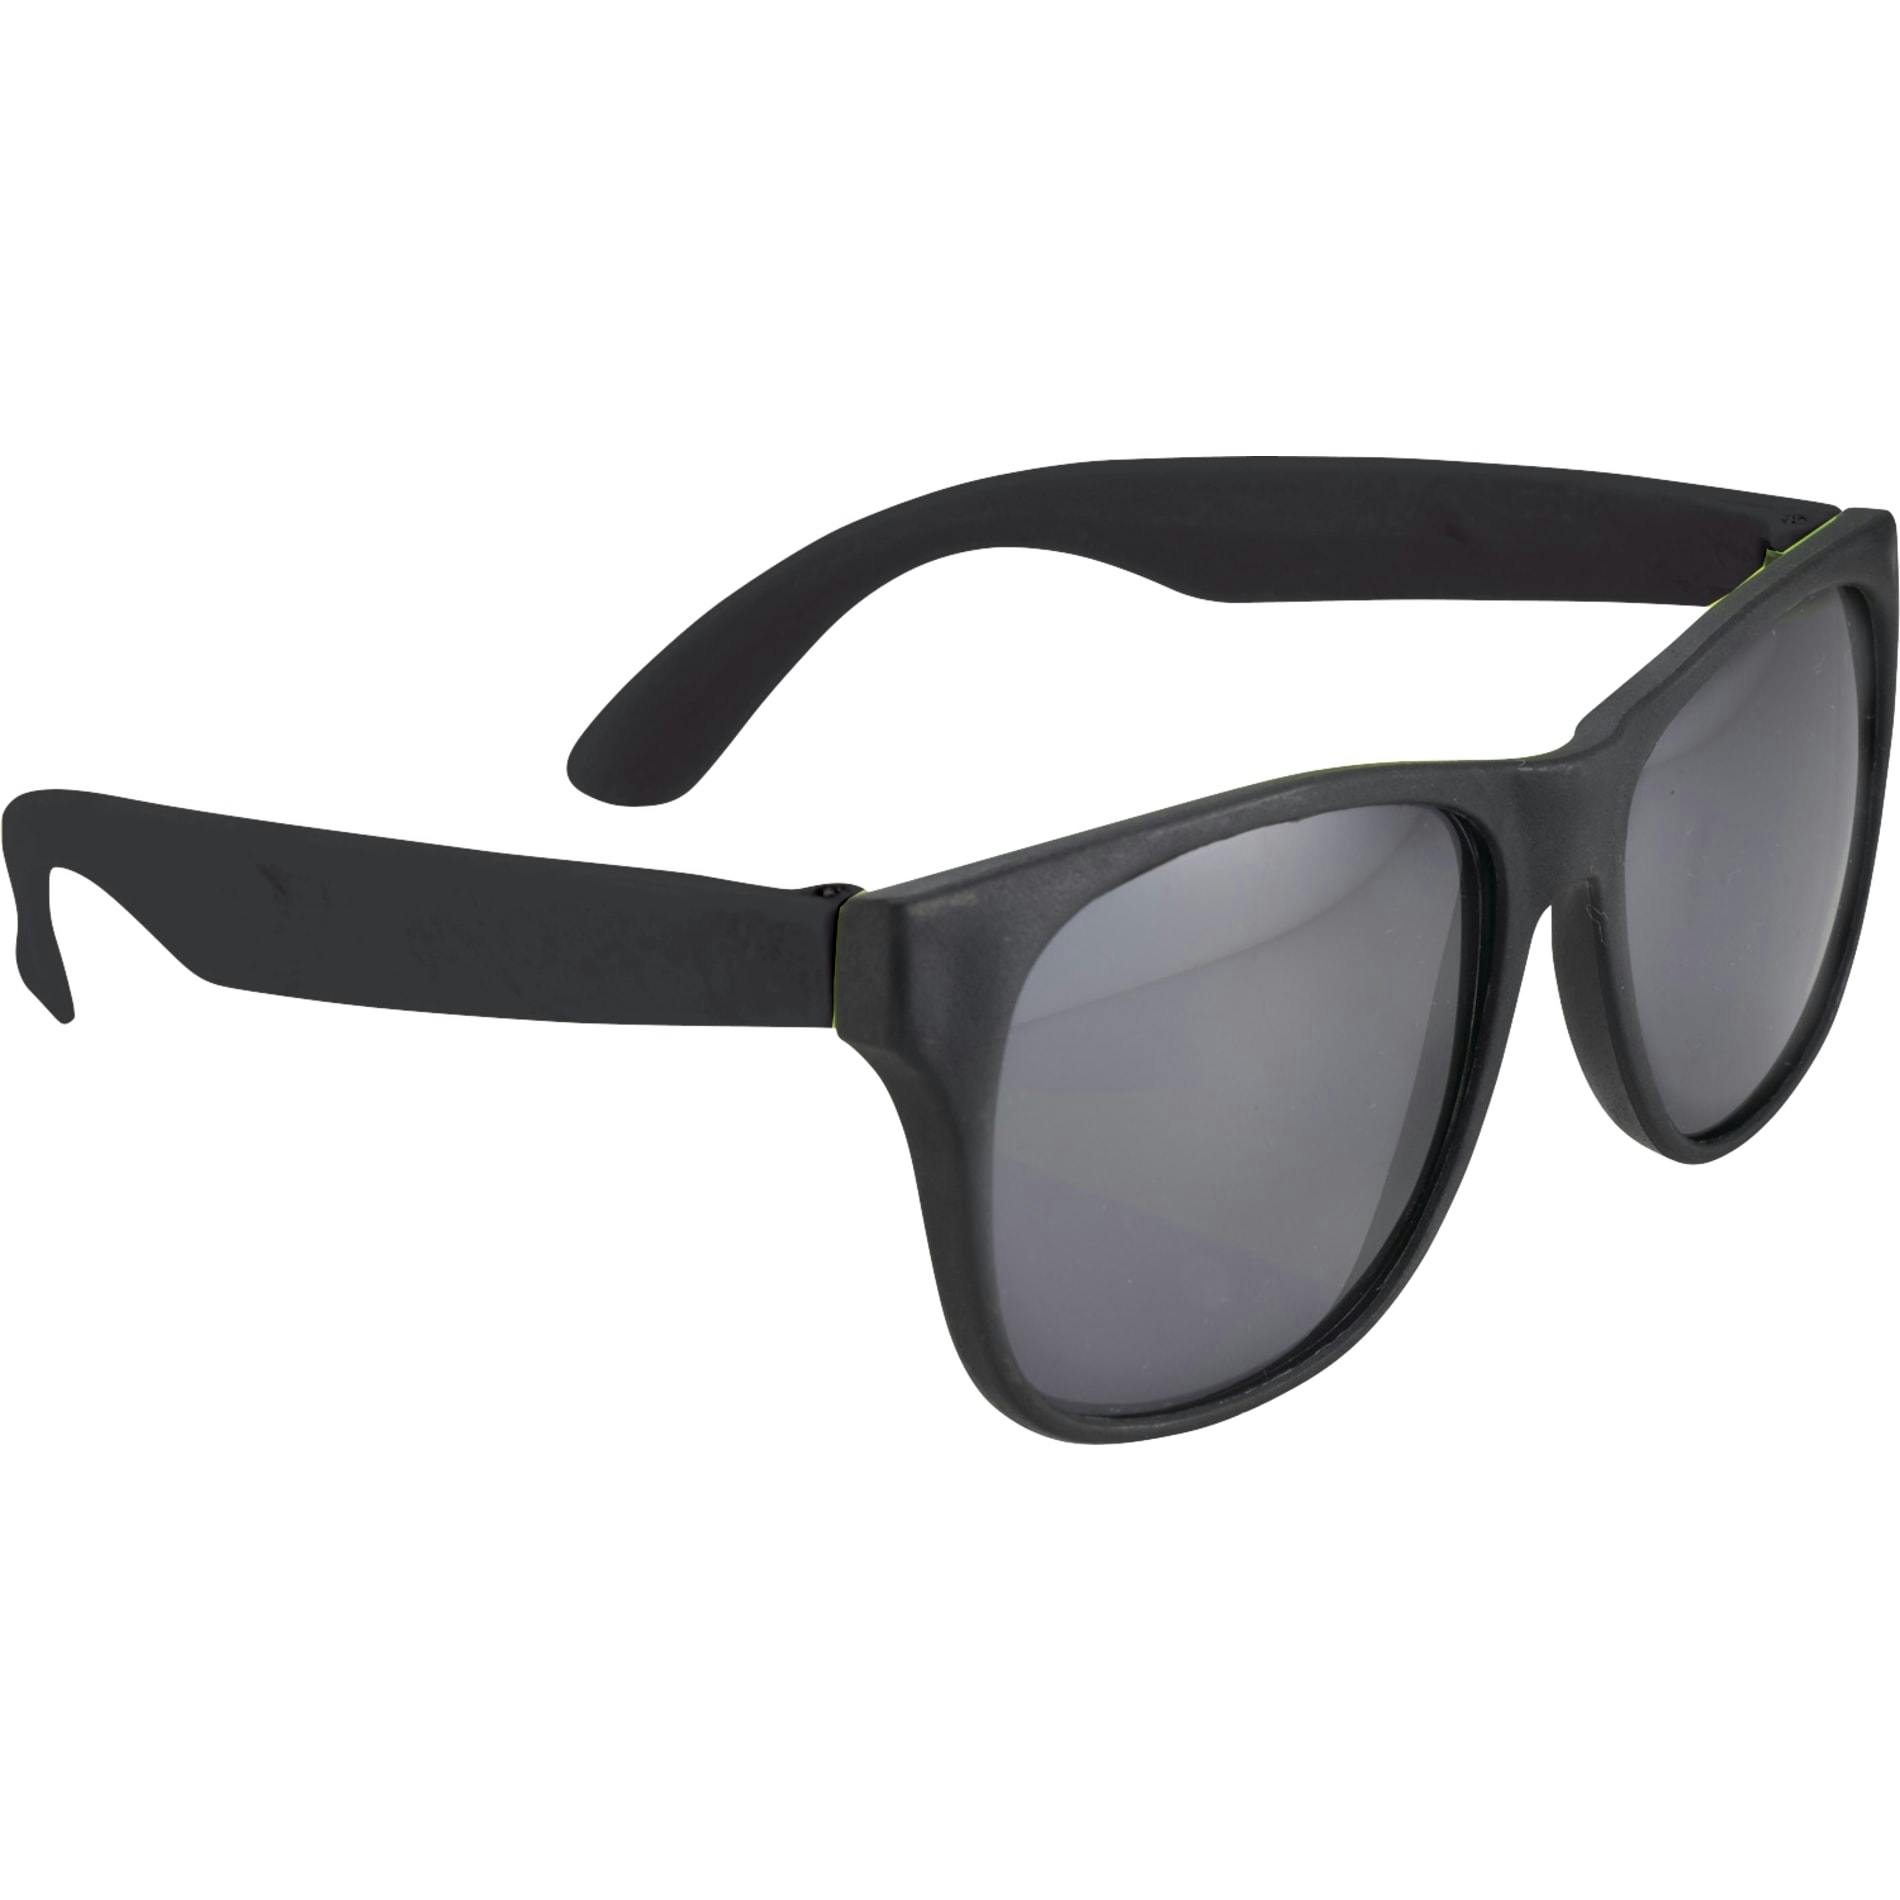 Retro Sunglasses - additional Image 1